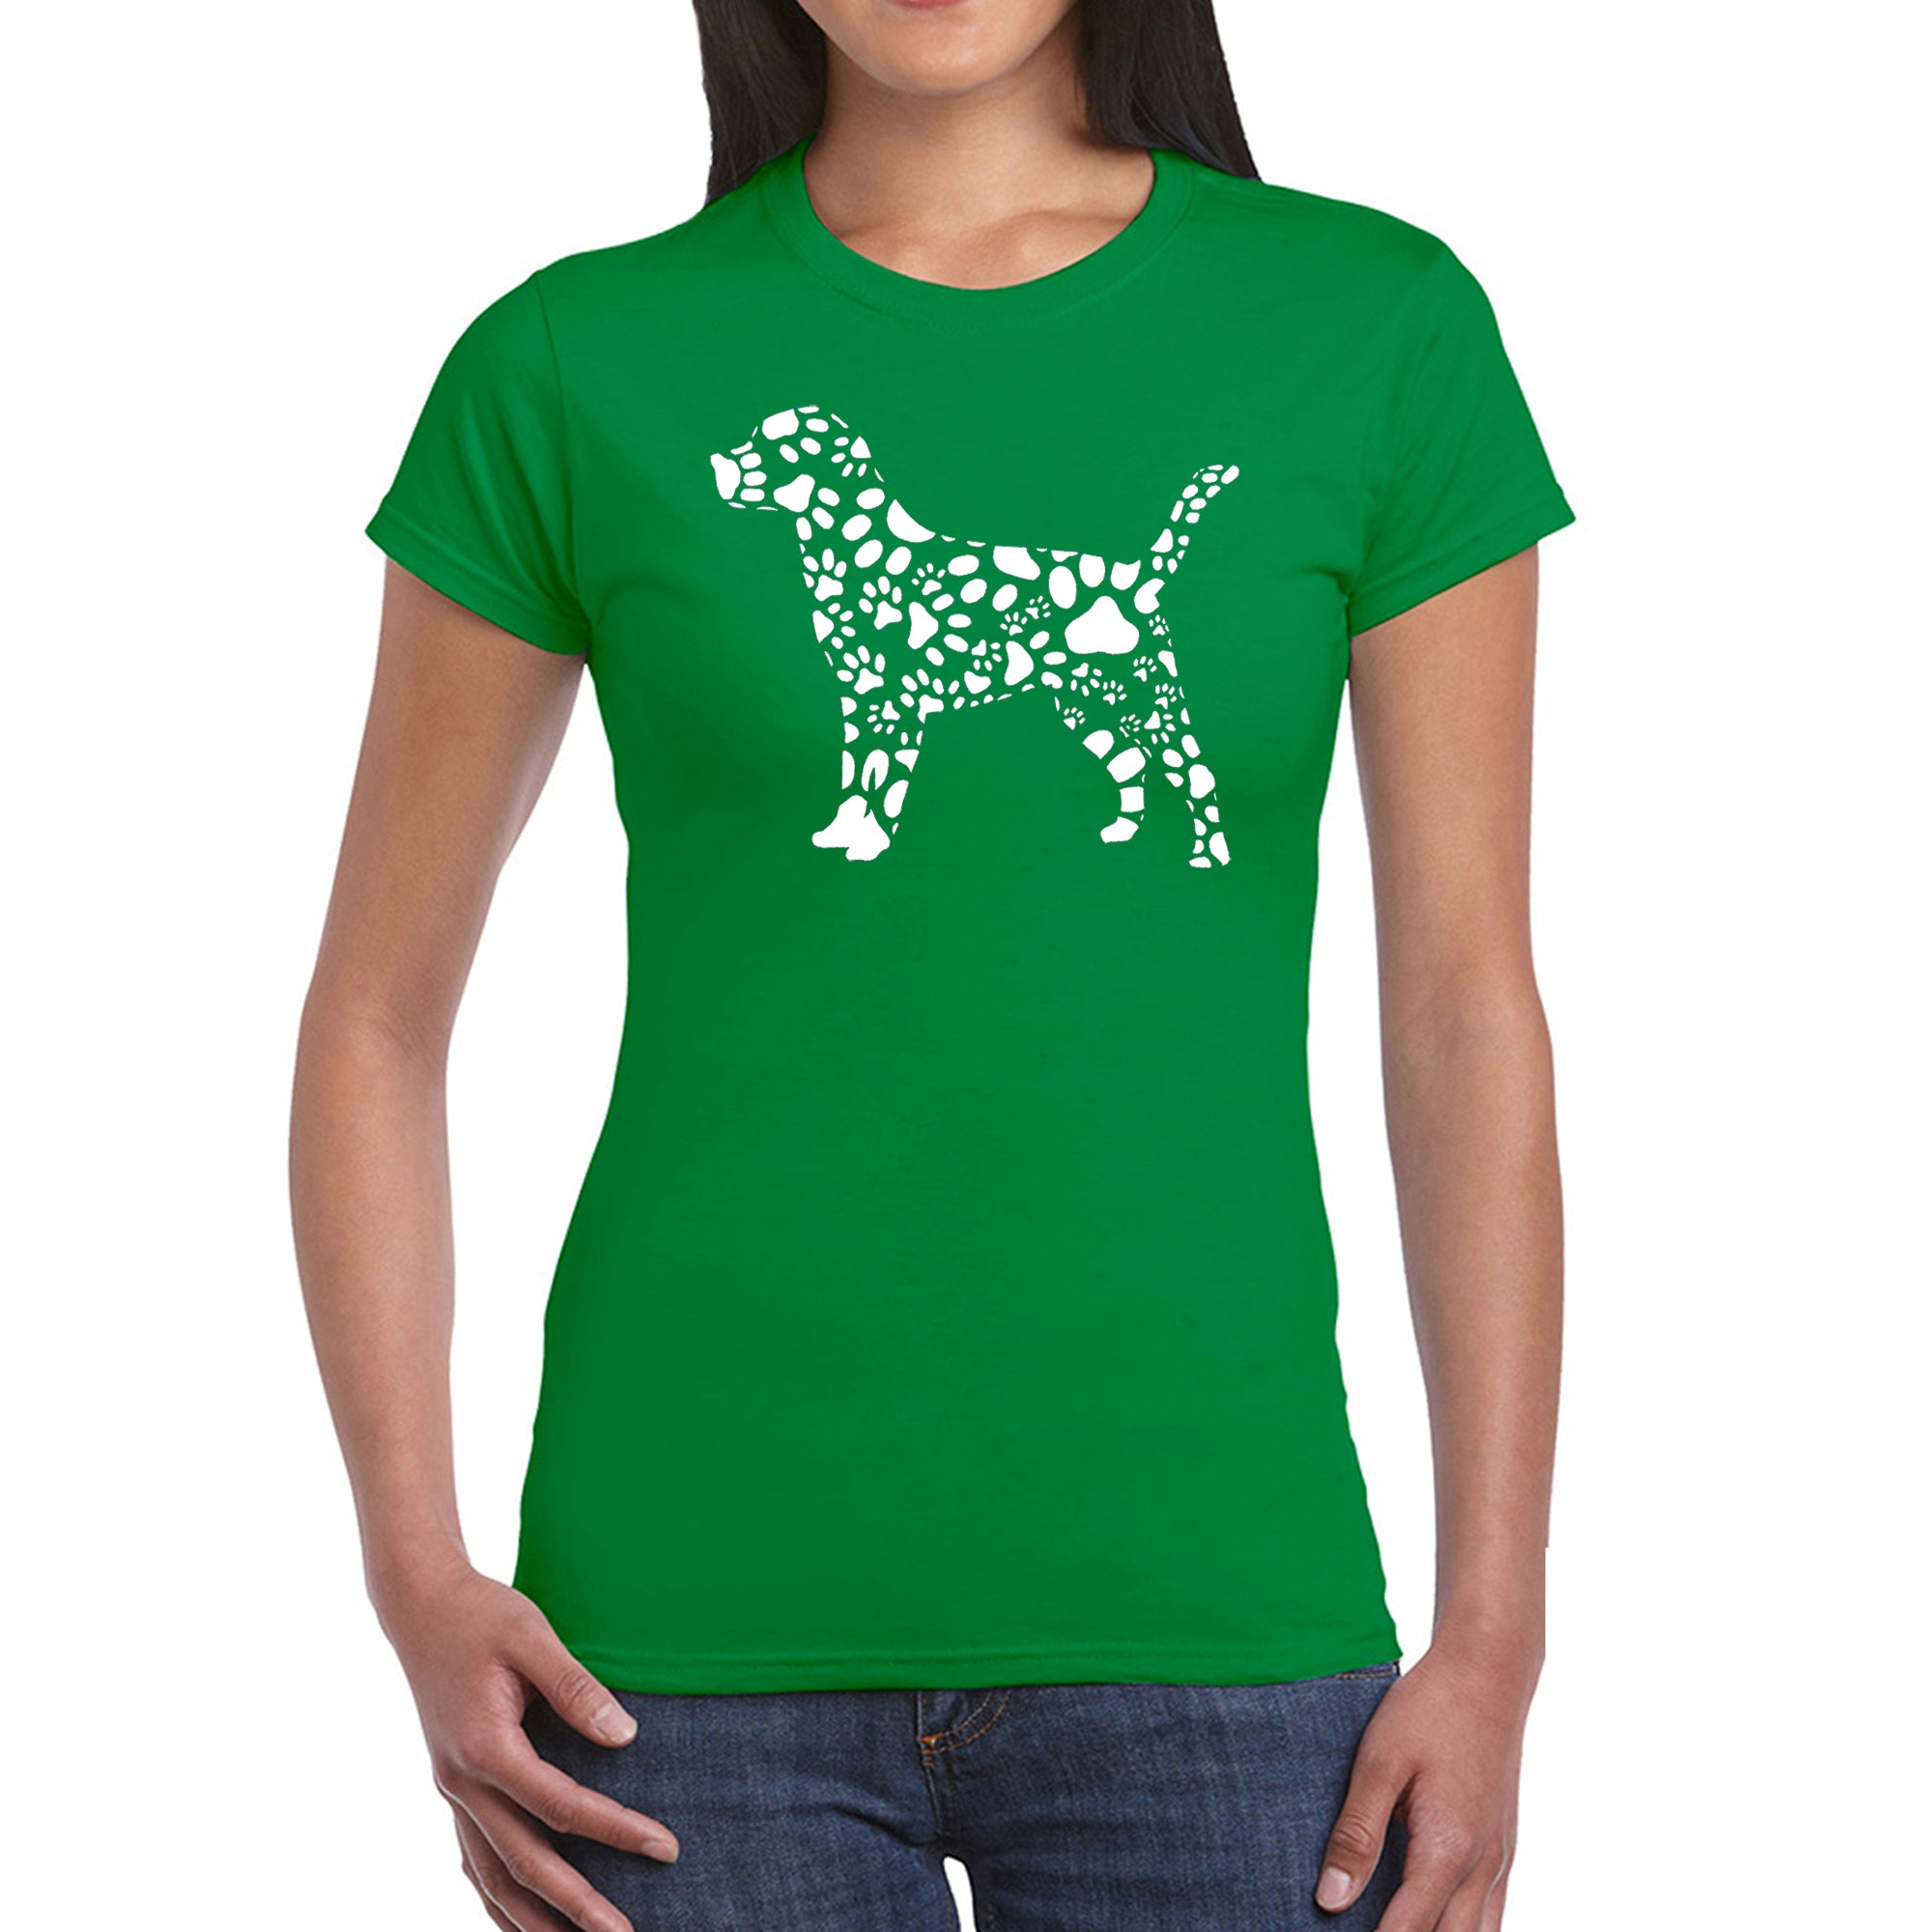 Dog Paw Prints - Women's Word Art T-Shirt - Kelly - XS